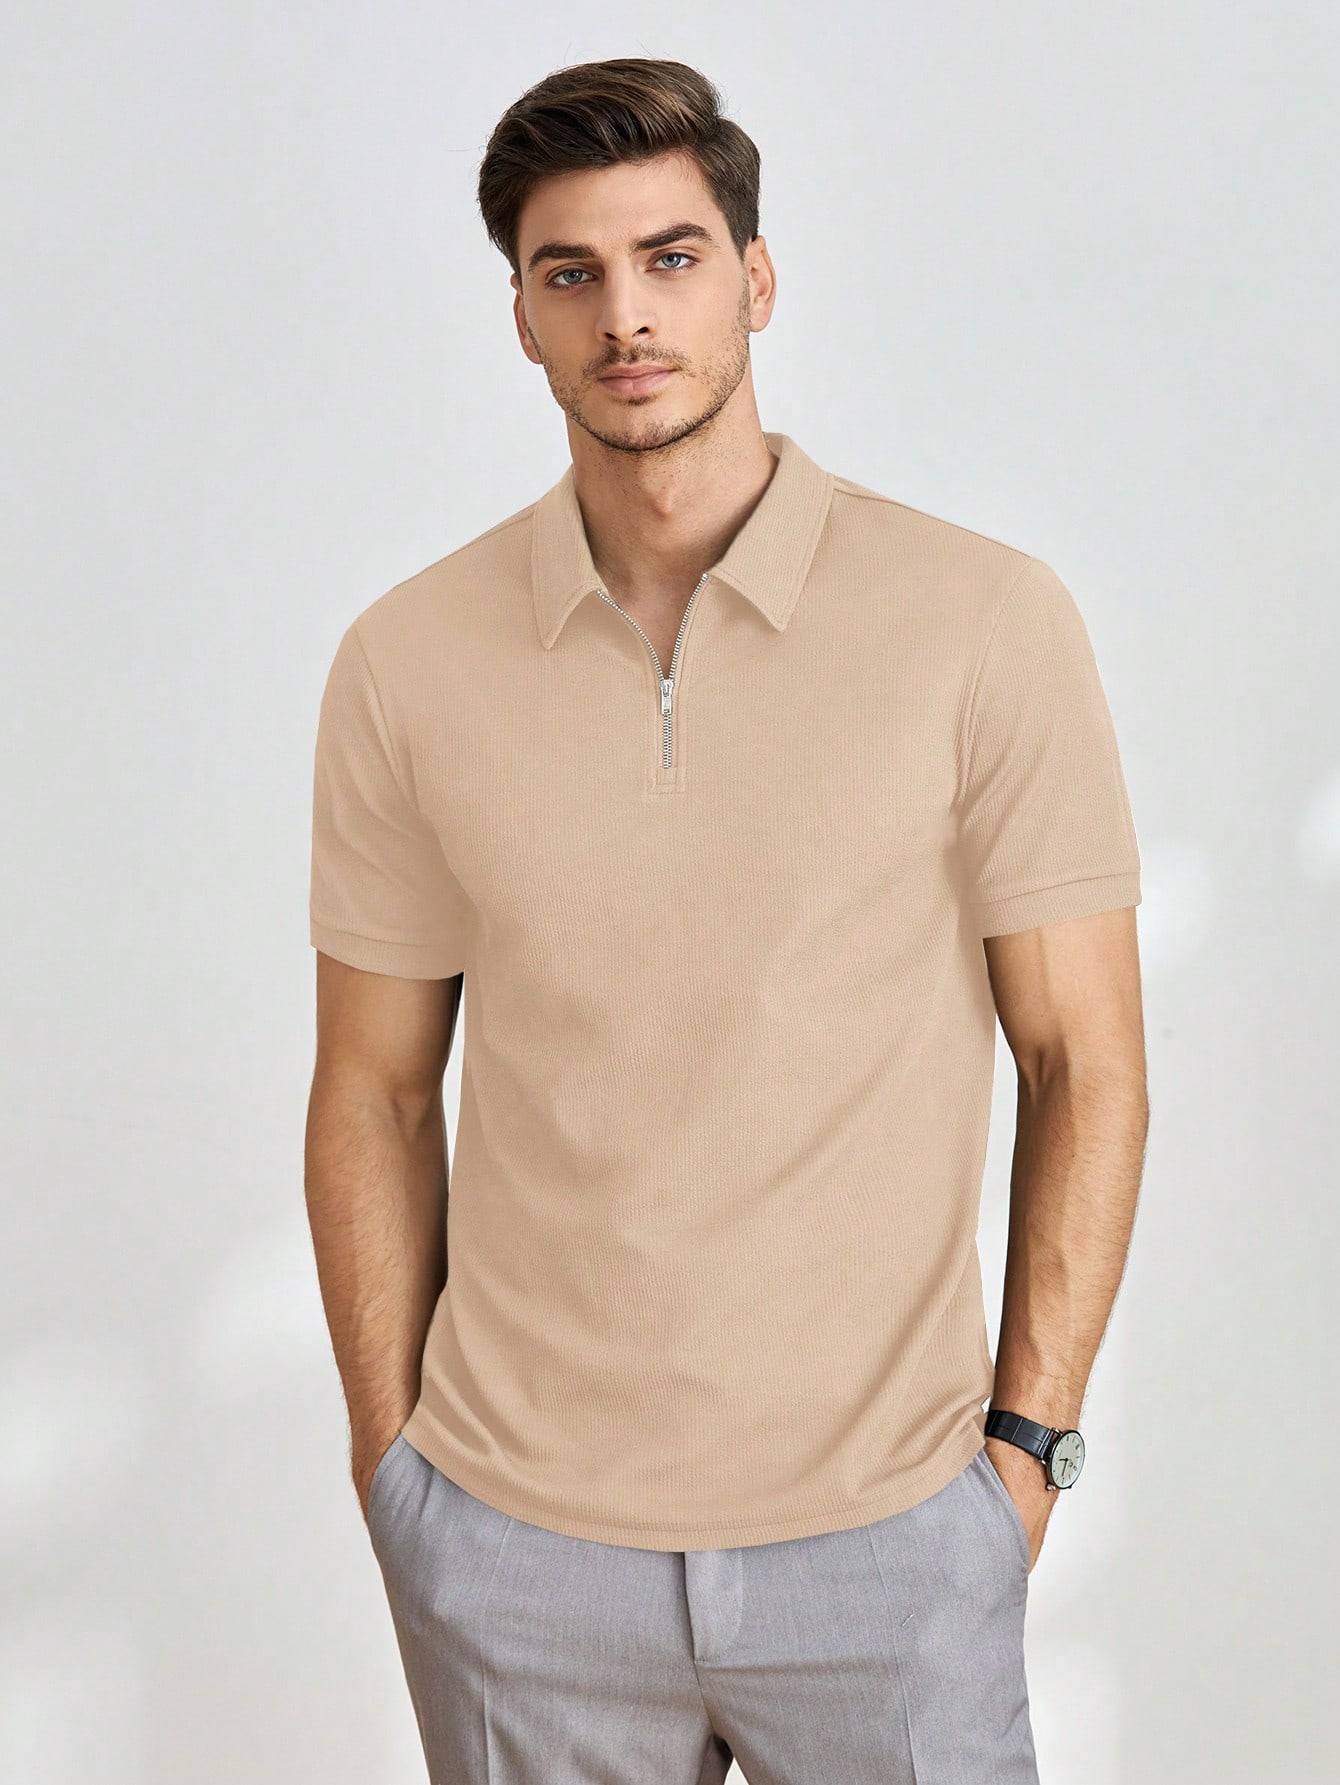 Мужская однотонная рубашка-поло с короткими рукавами Manfinity Homme, абрикос